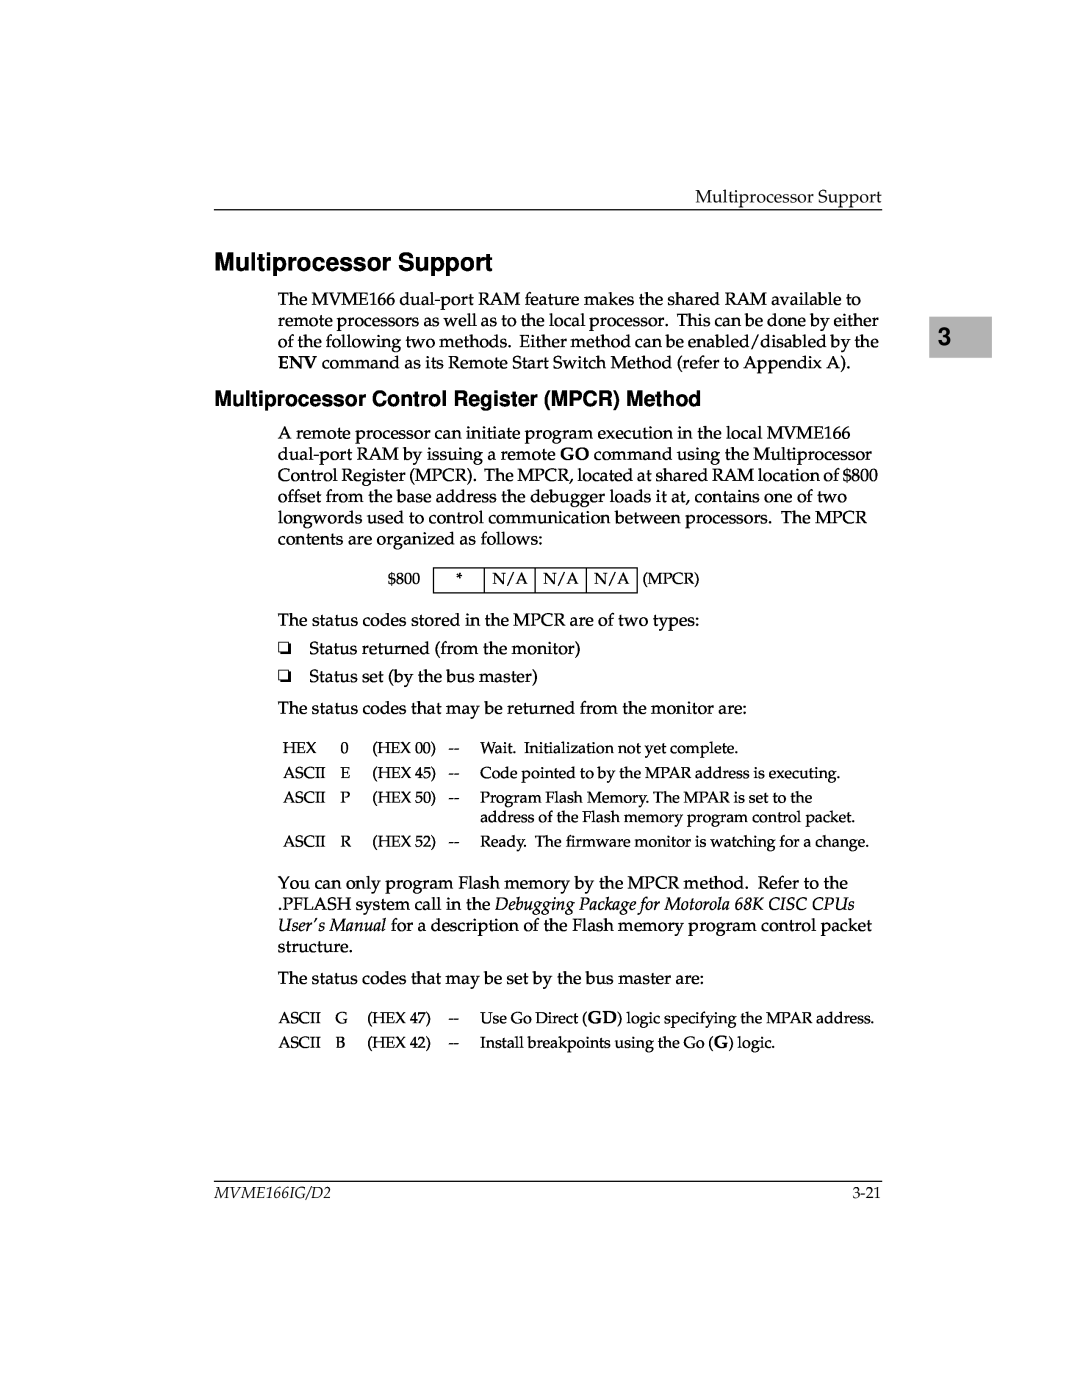 Motorola MVME166D2, MVME166IG/D2 manual Multiprocessor Support, Multiprocessor Control Register MPCR Method 